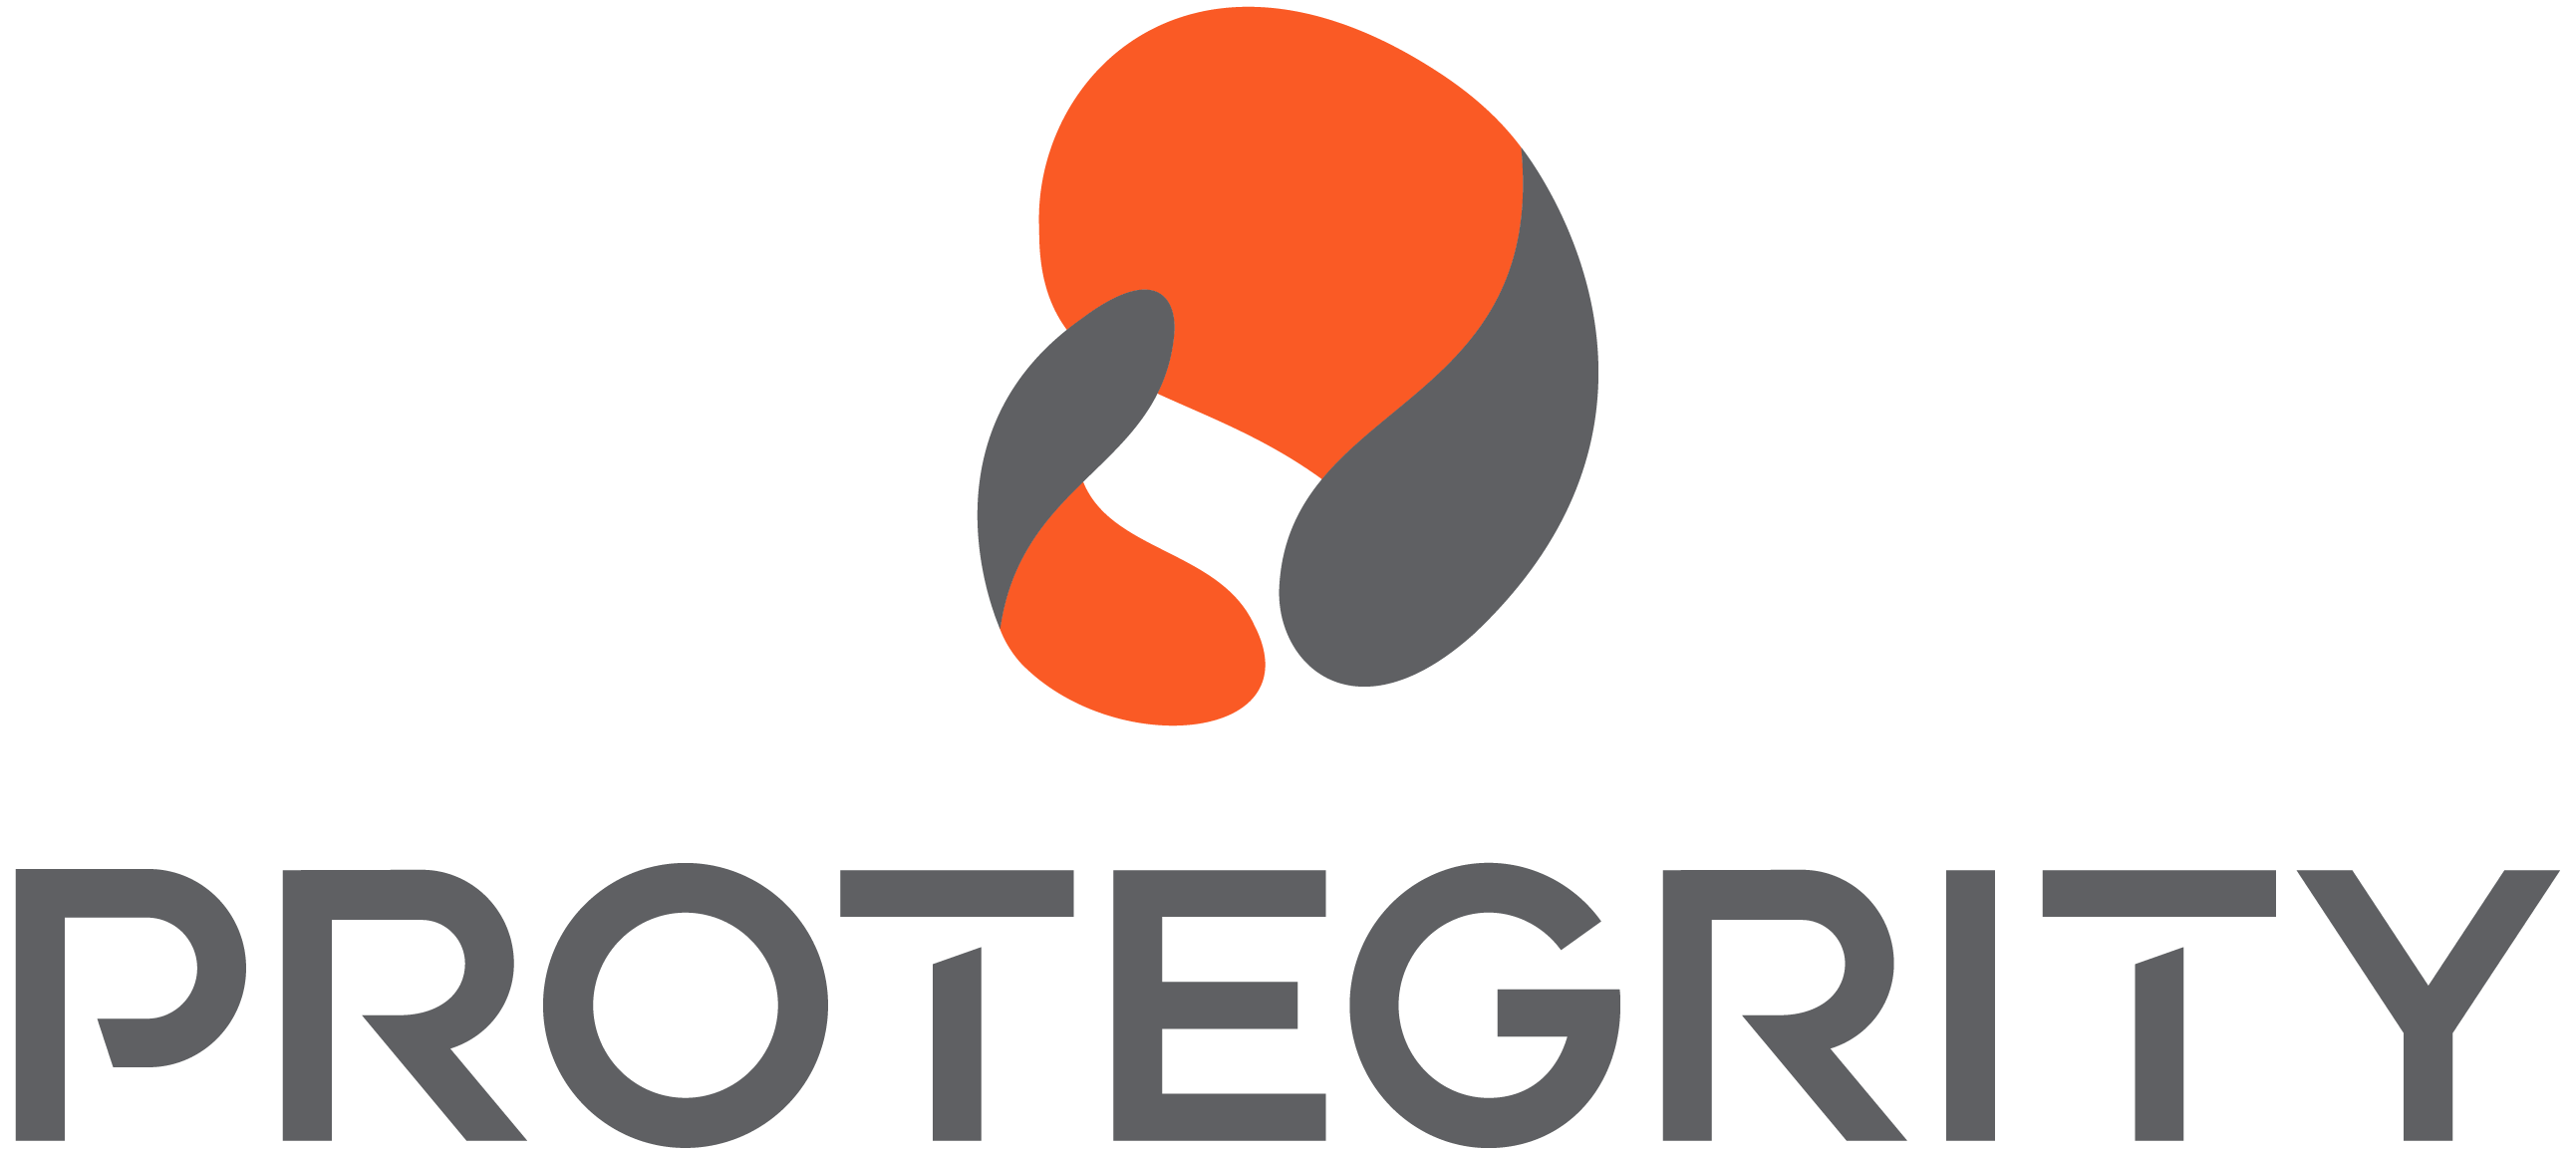 Protegrity-Logo-orange-dark-vertical